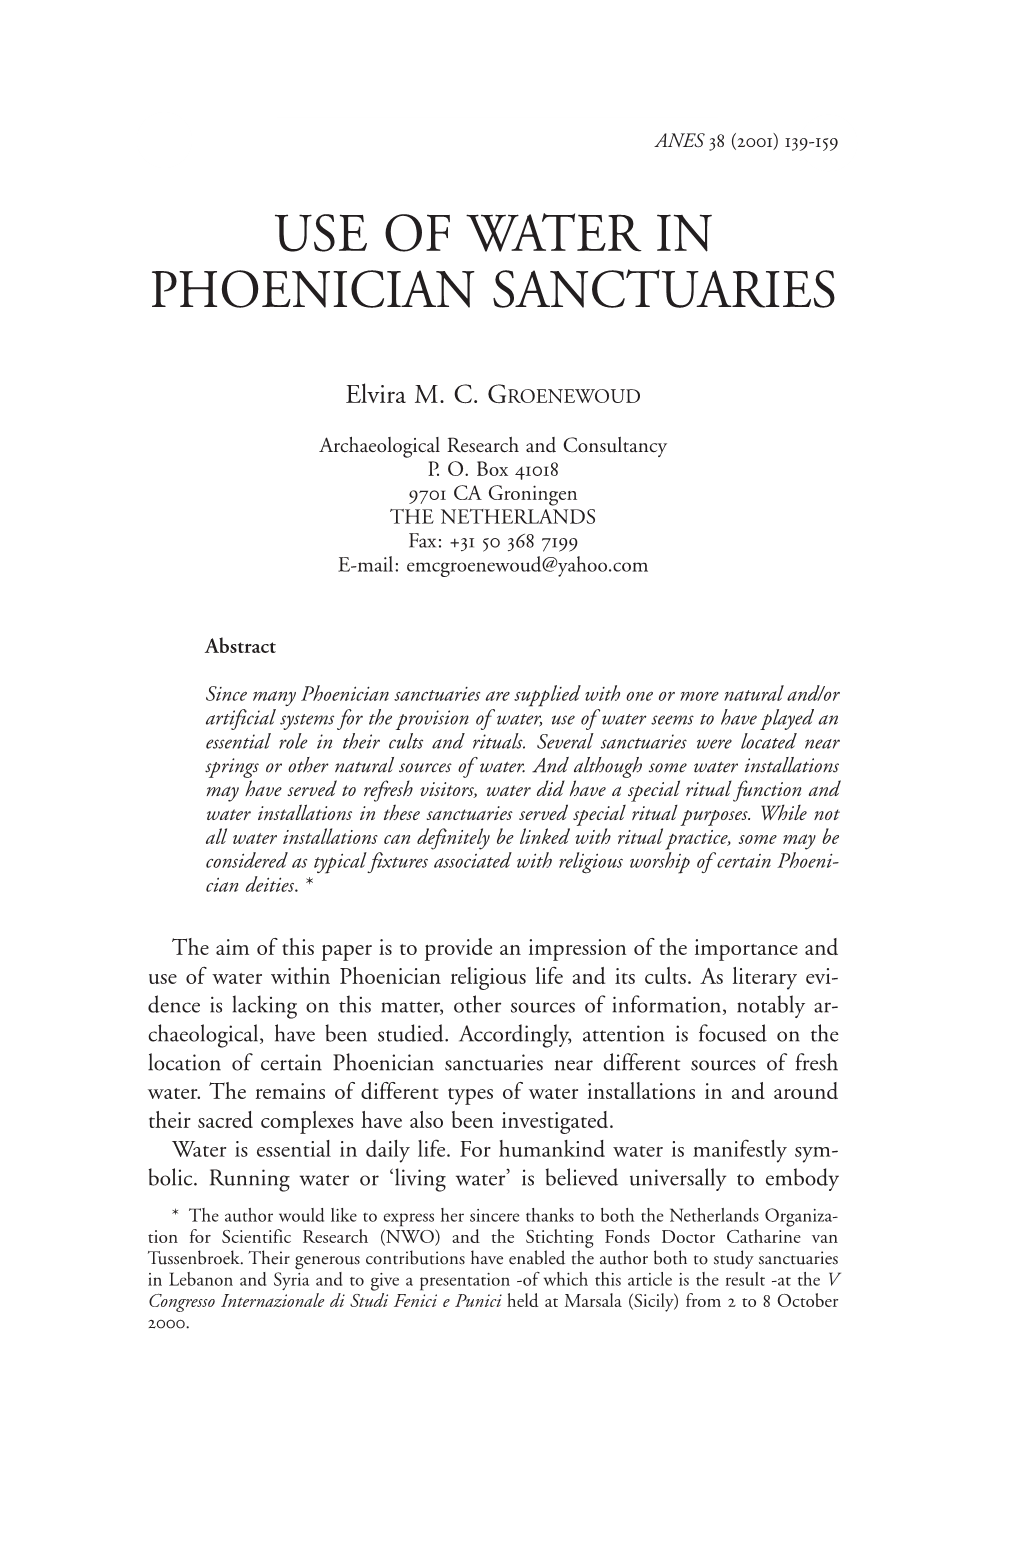 Use of Water in Phoenician Sanctuariesanes 38 (2001) 139-159139